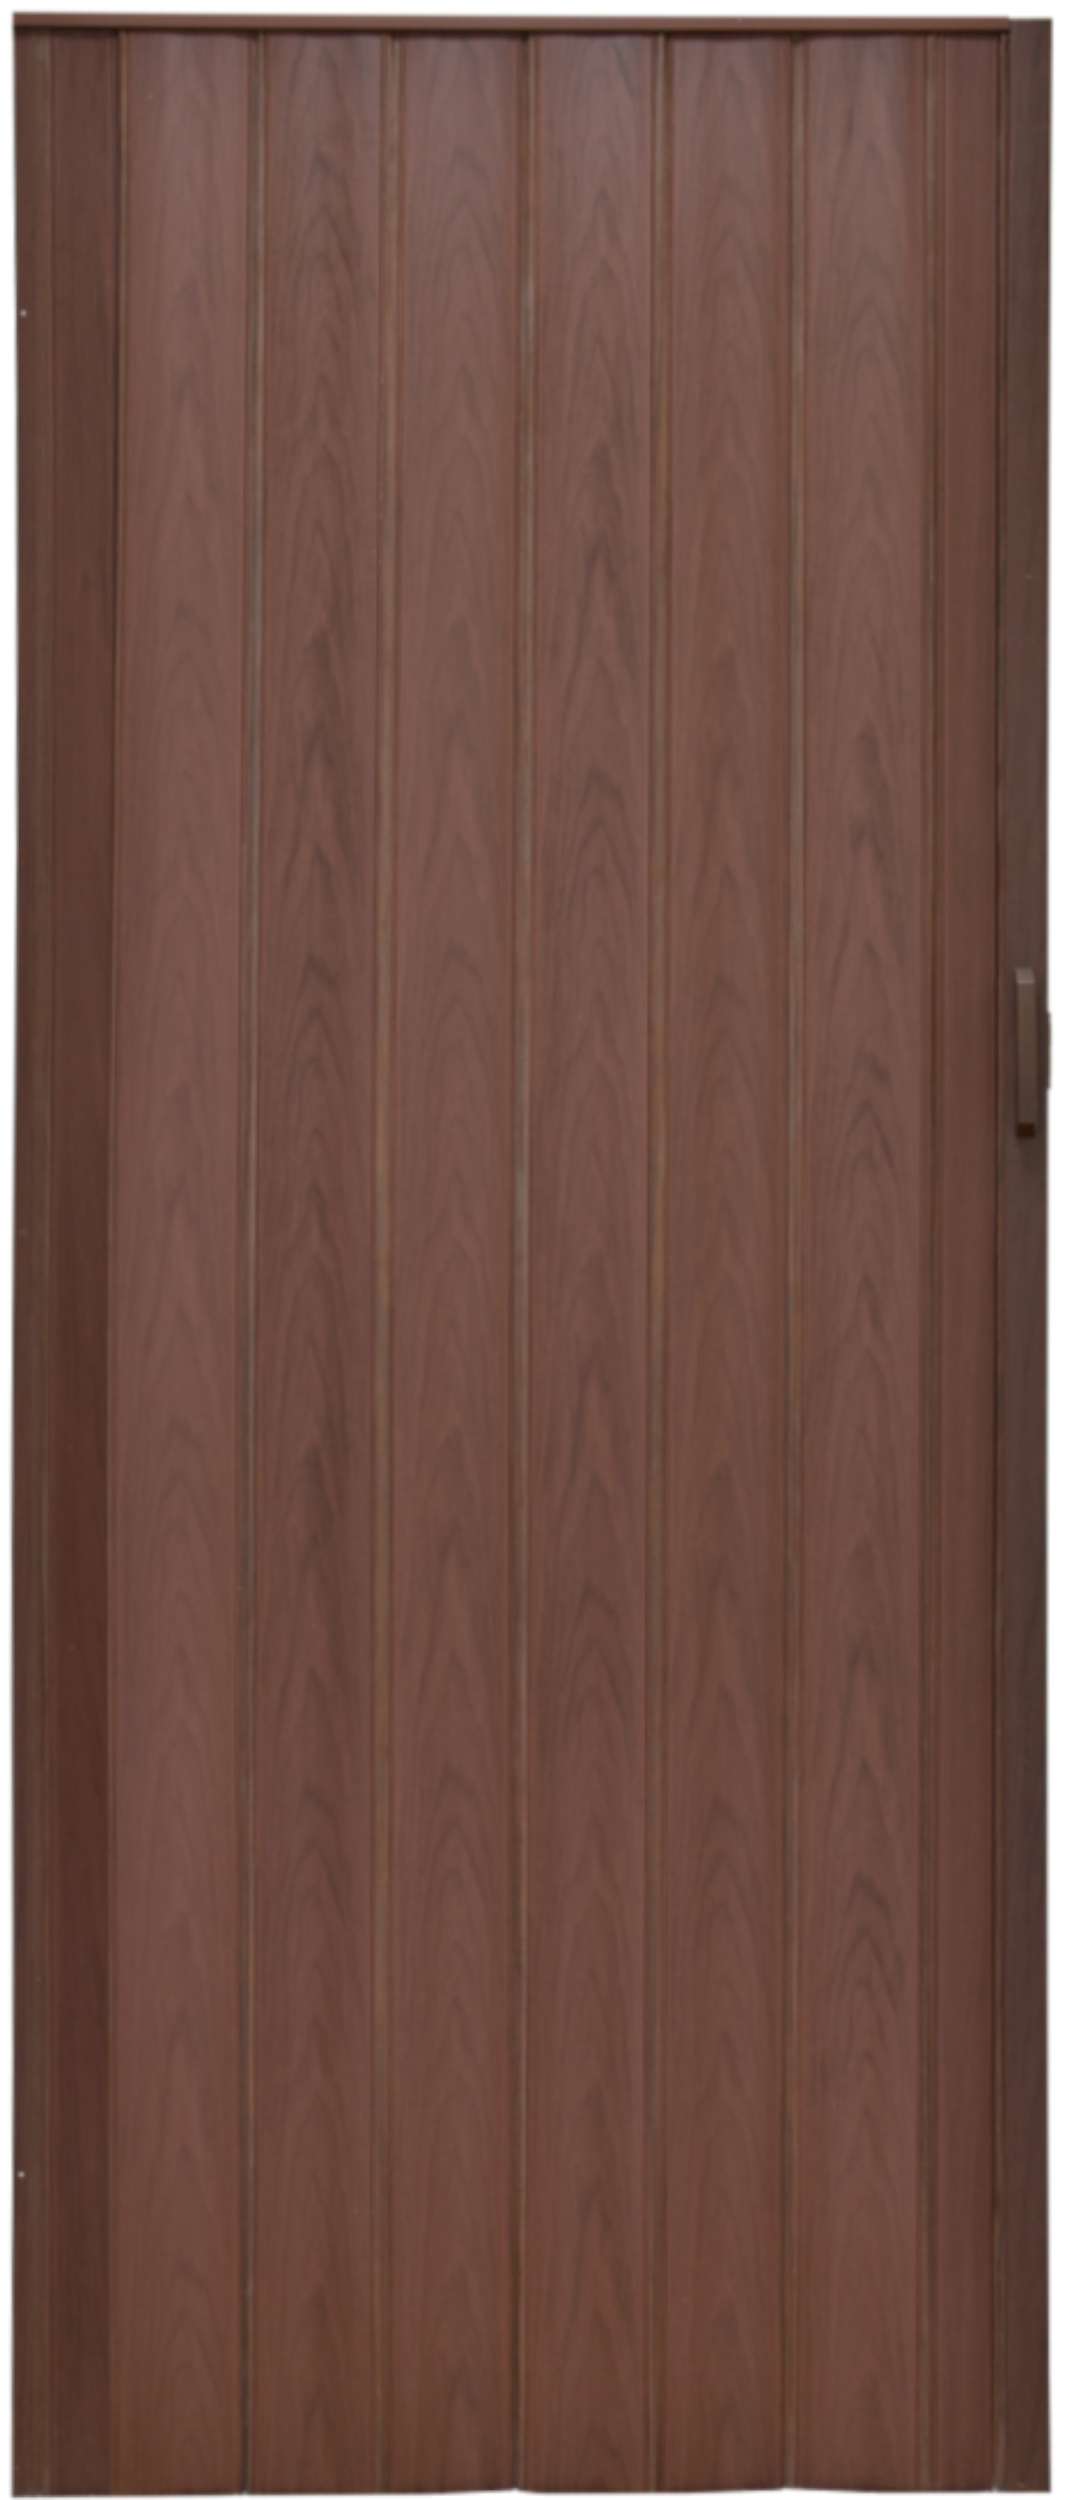 Drzwi Harmonijkowe 004 Wenge 80 cm